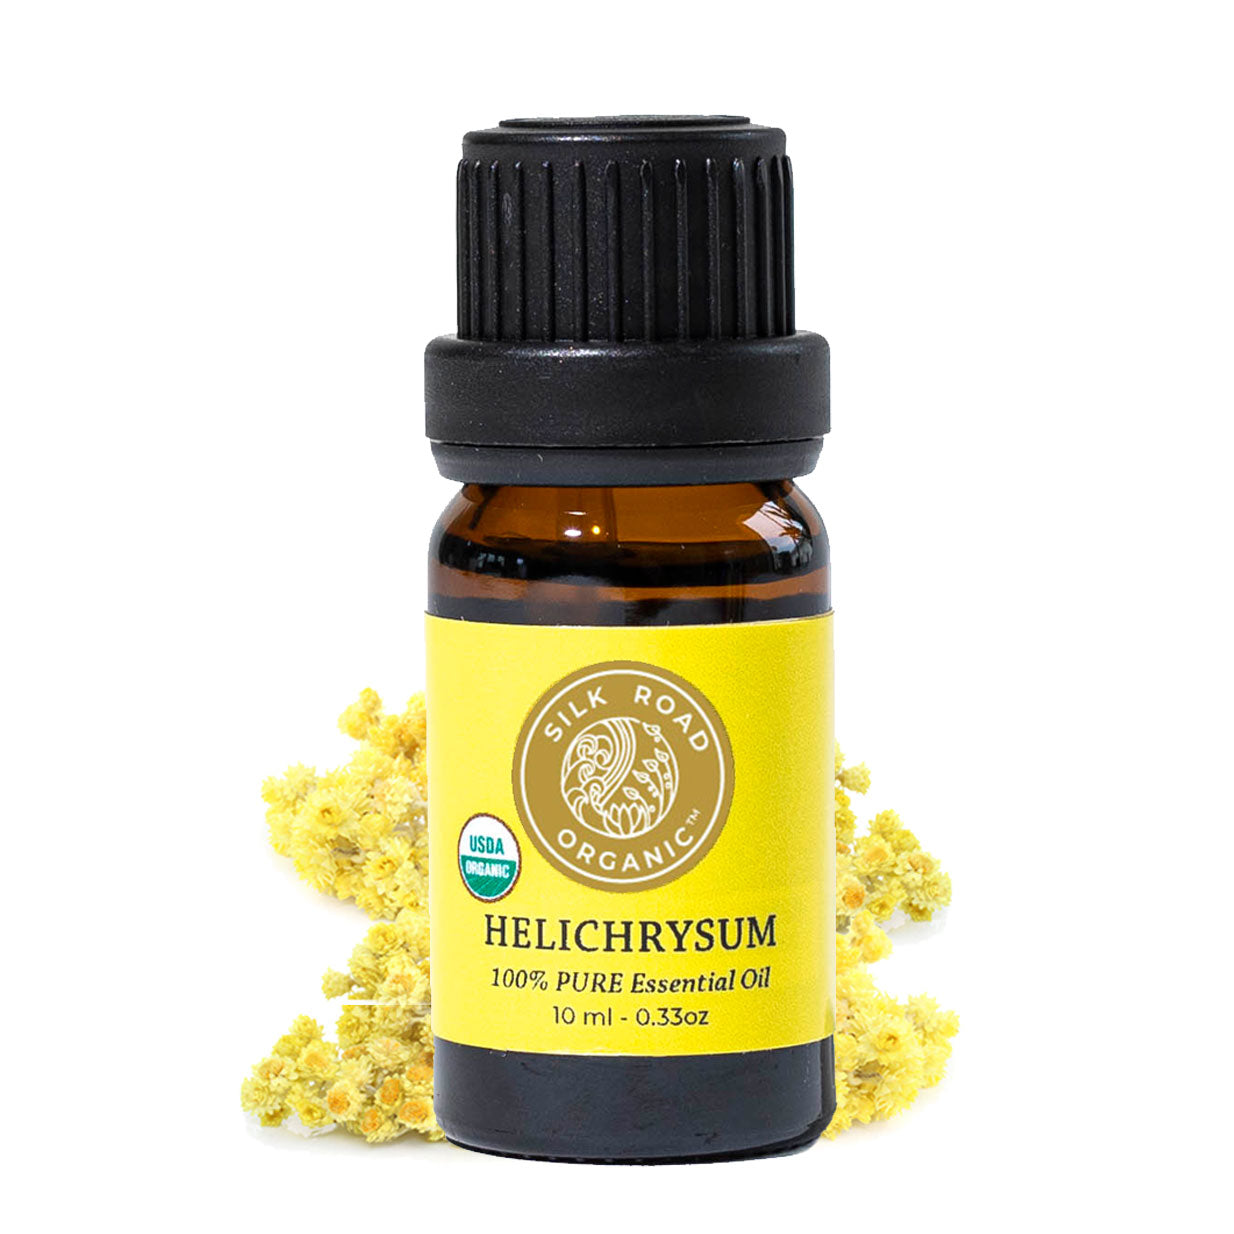 helichrysum euro dropper diffuser blend essential oil amber glass bottle silk road organic restore skin